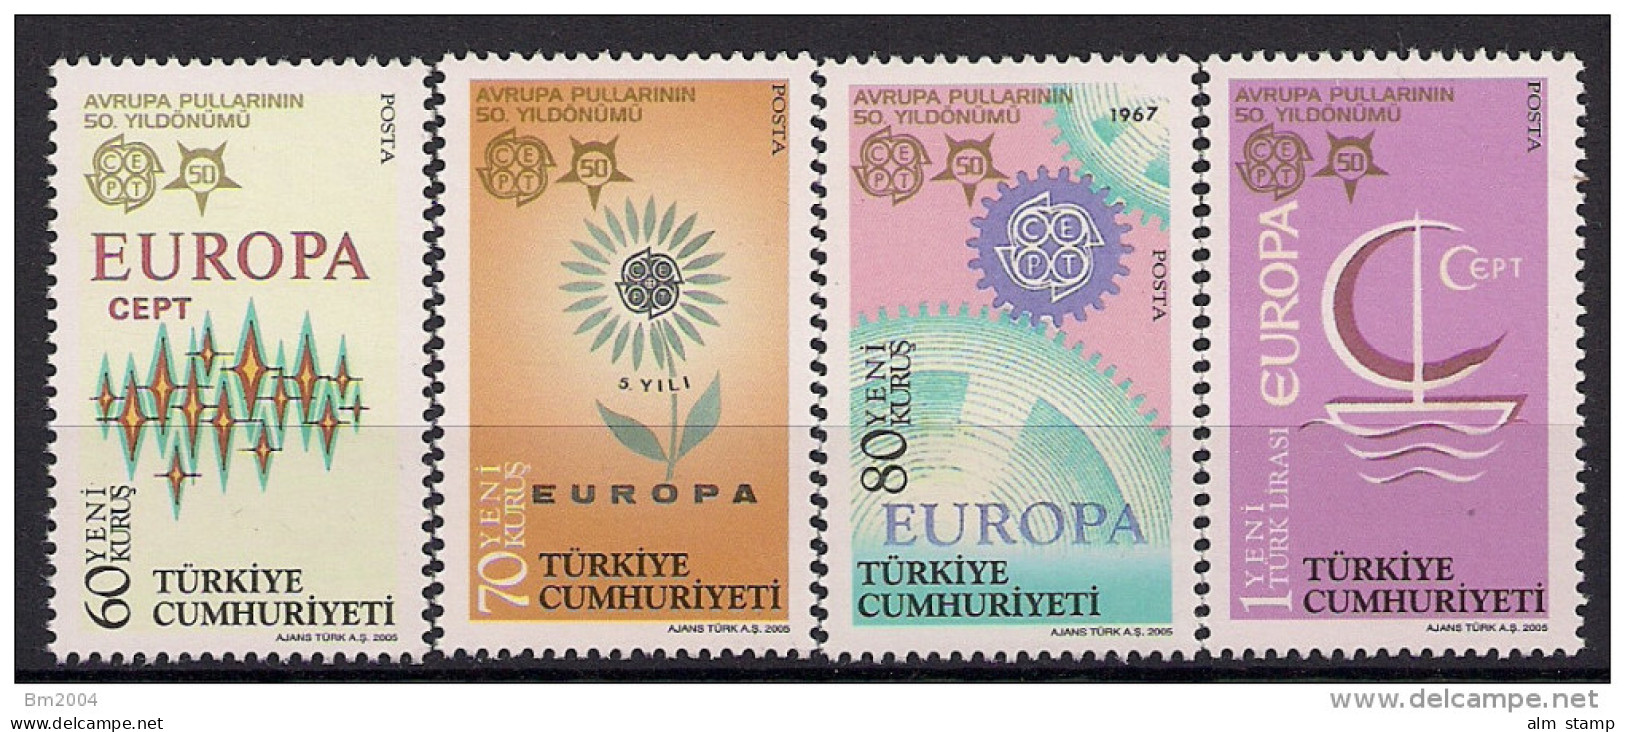 2005 Türkei Türkiye  Mi 3487-0 **MNH  50 Jahre Europamarken - Ongebruikt